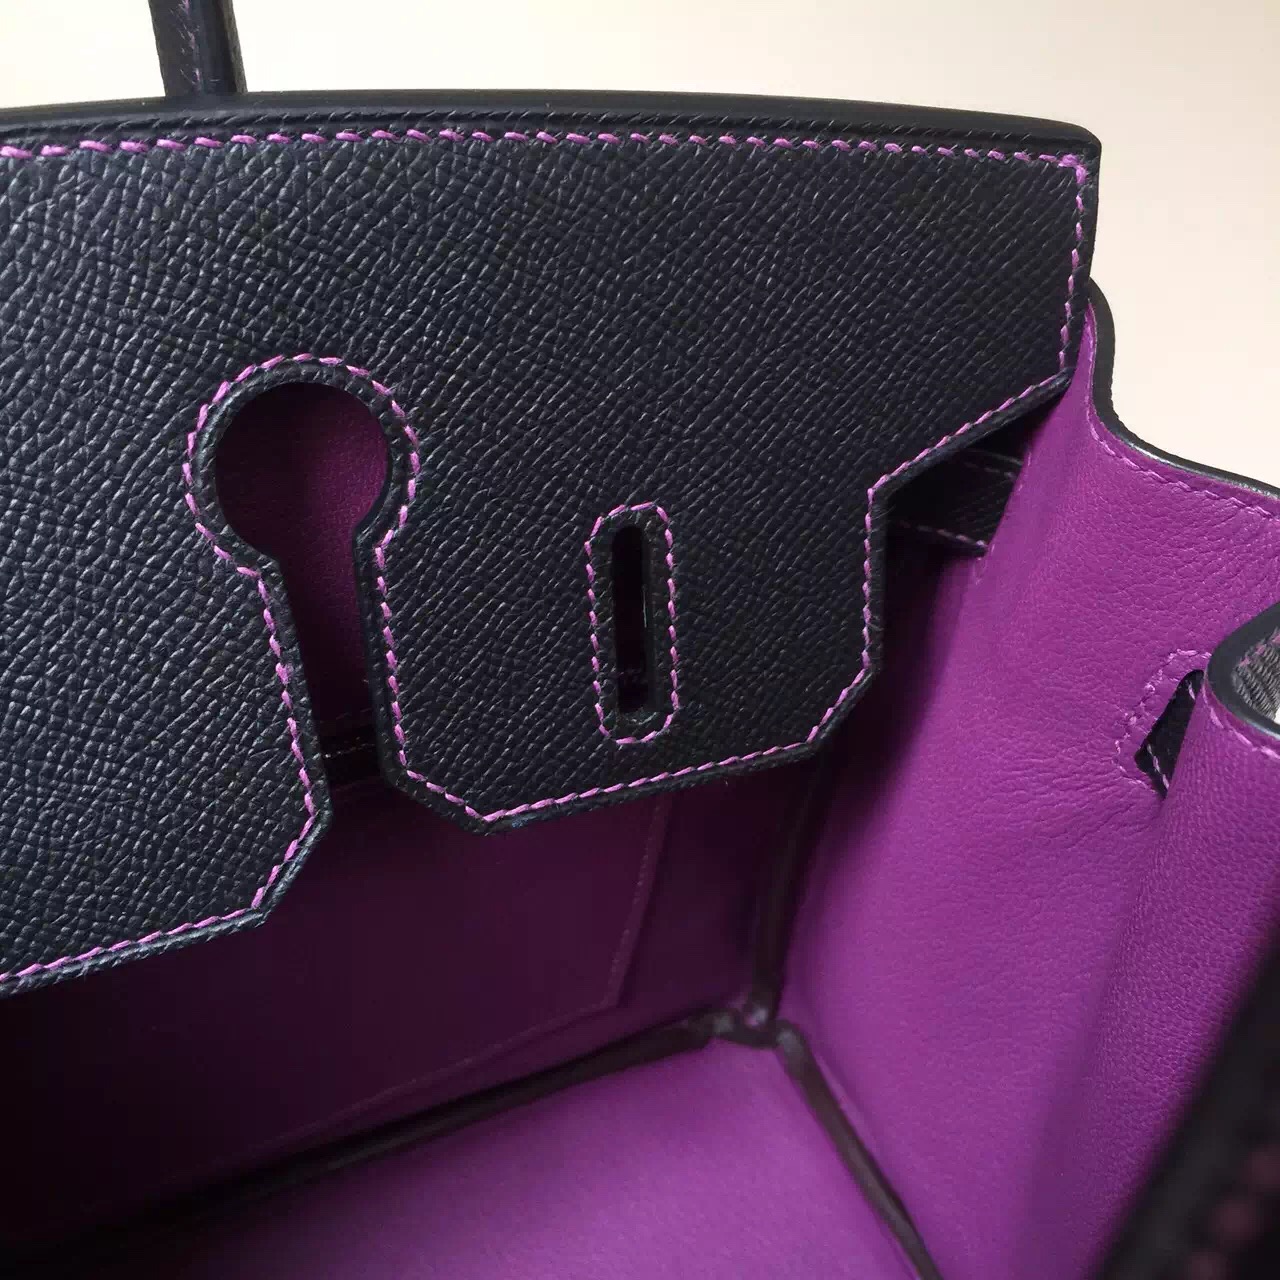 Discount Hermes Birkin30cm Bag CK89 Black/P9 Purple inner Epsom Calfskin Leather